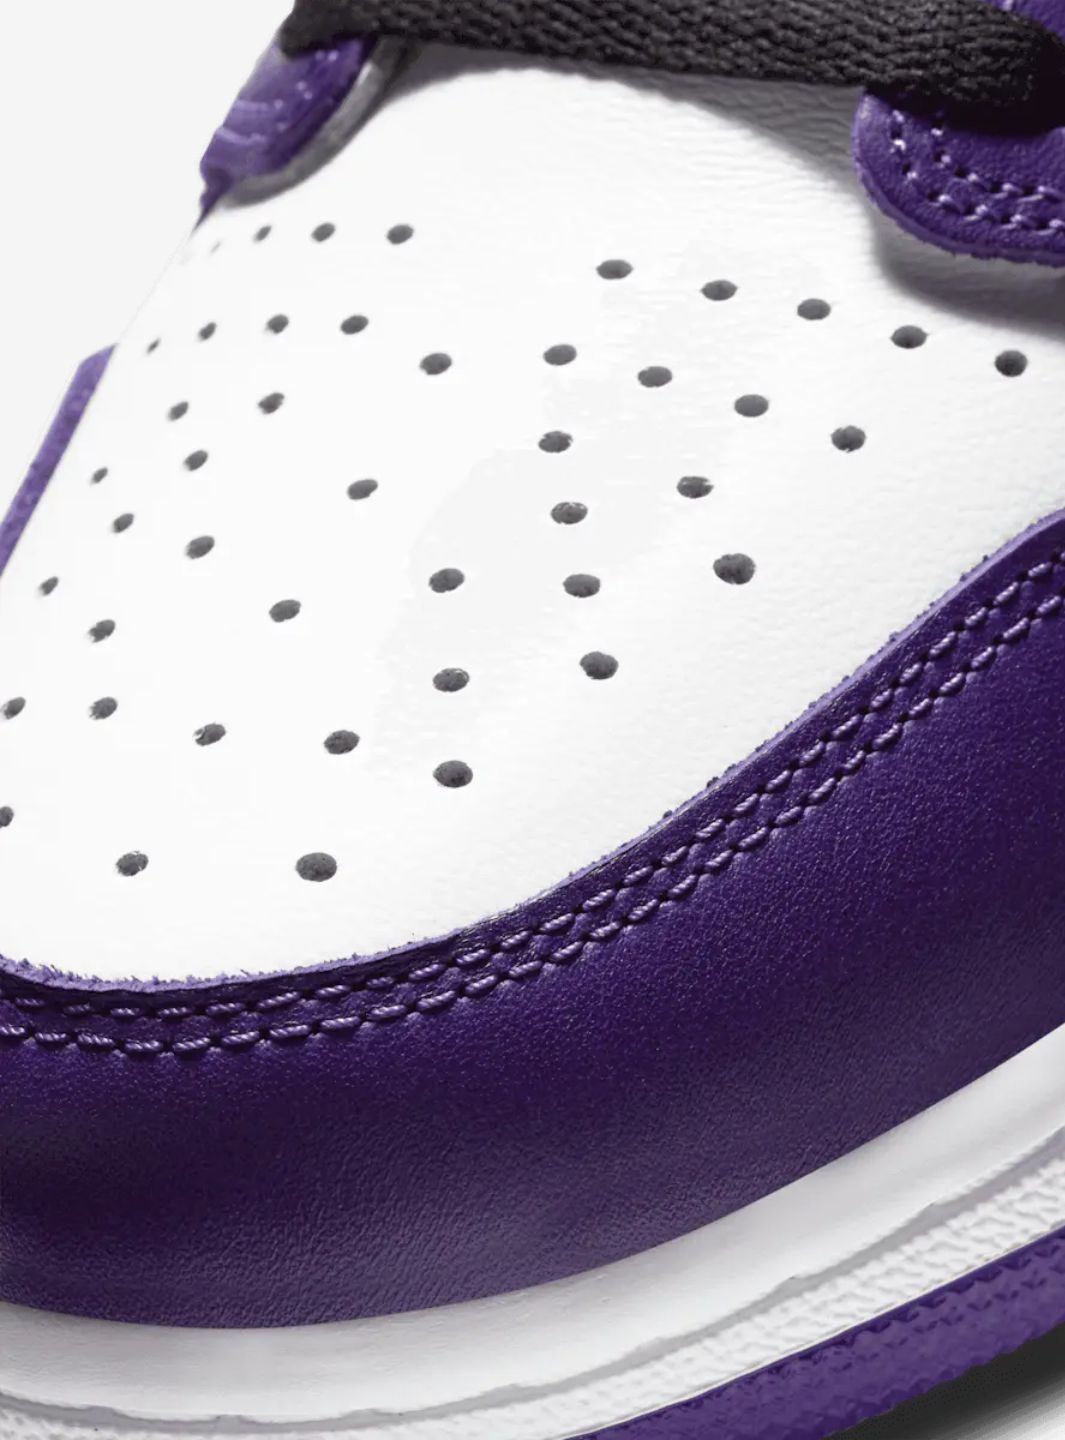 Air Jordan 1 Retro High Court Purple White - 555088-500 | ResellZone